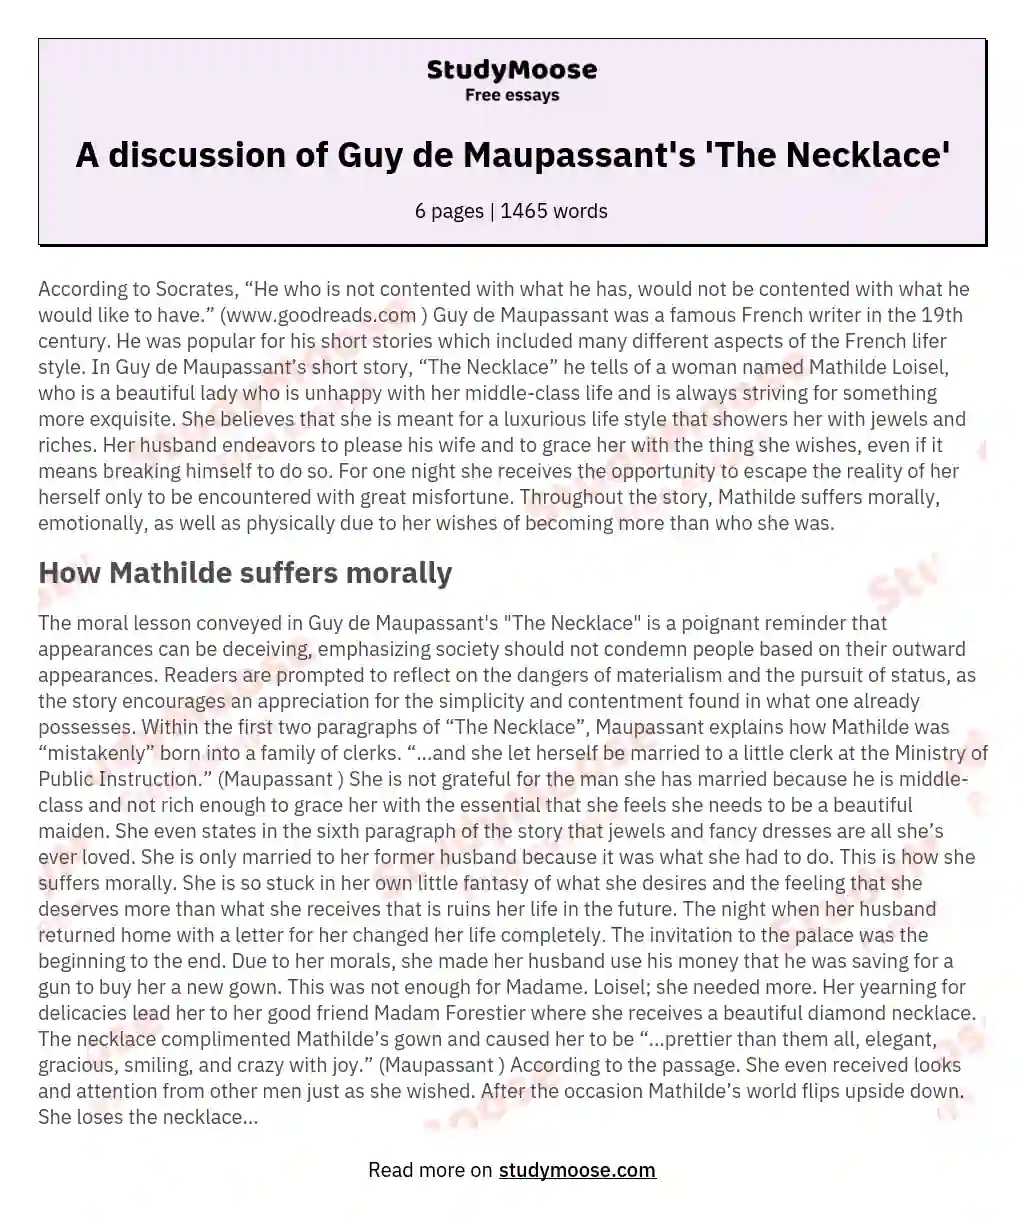 A discussion of Guy de Maupassant's 'The Necklace' essay